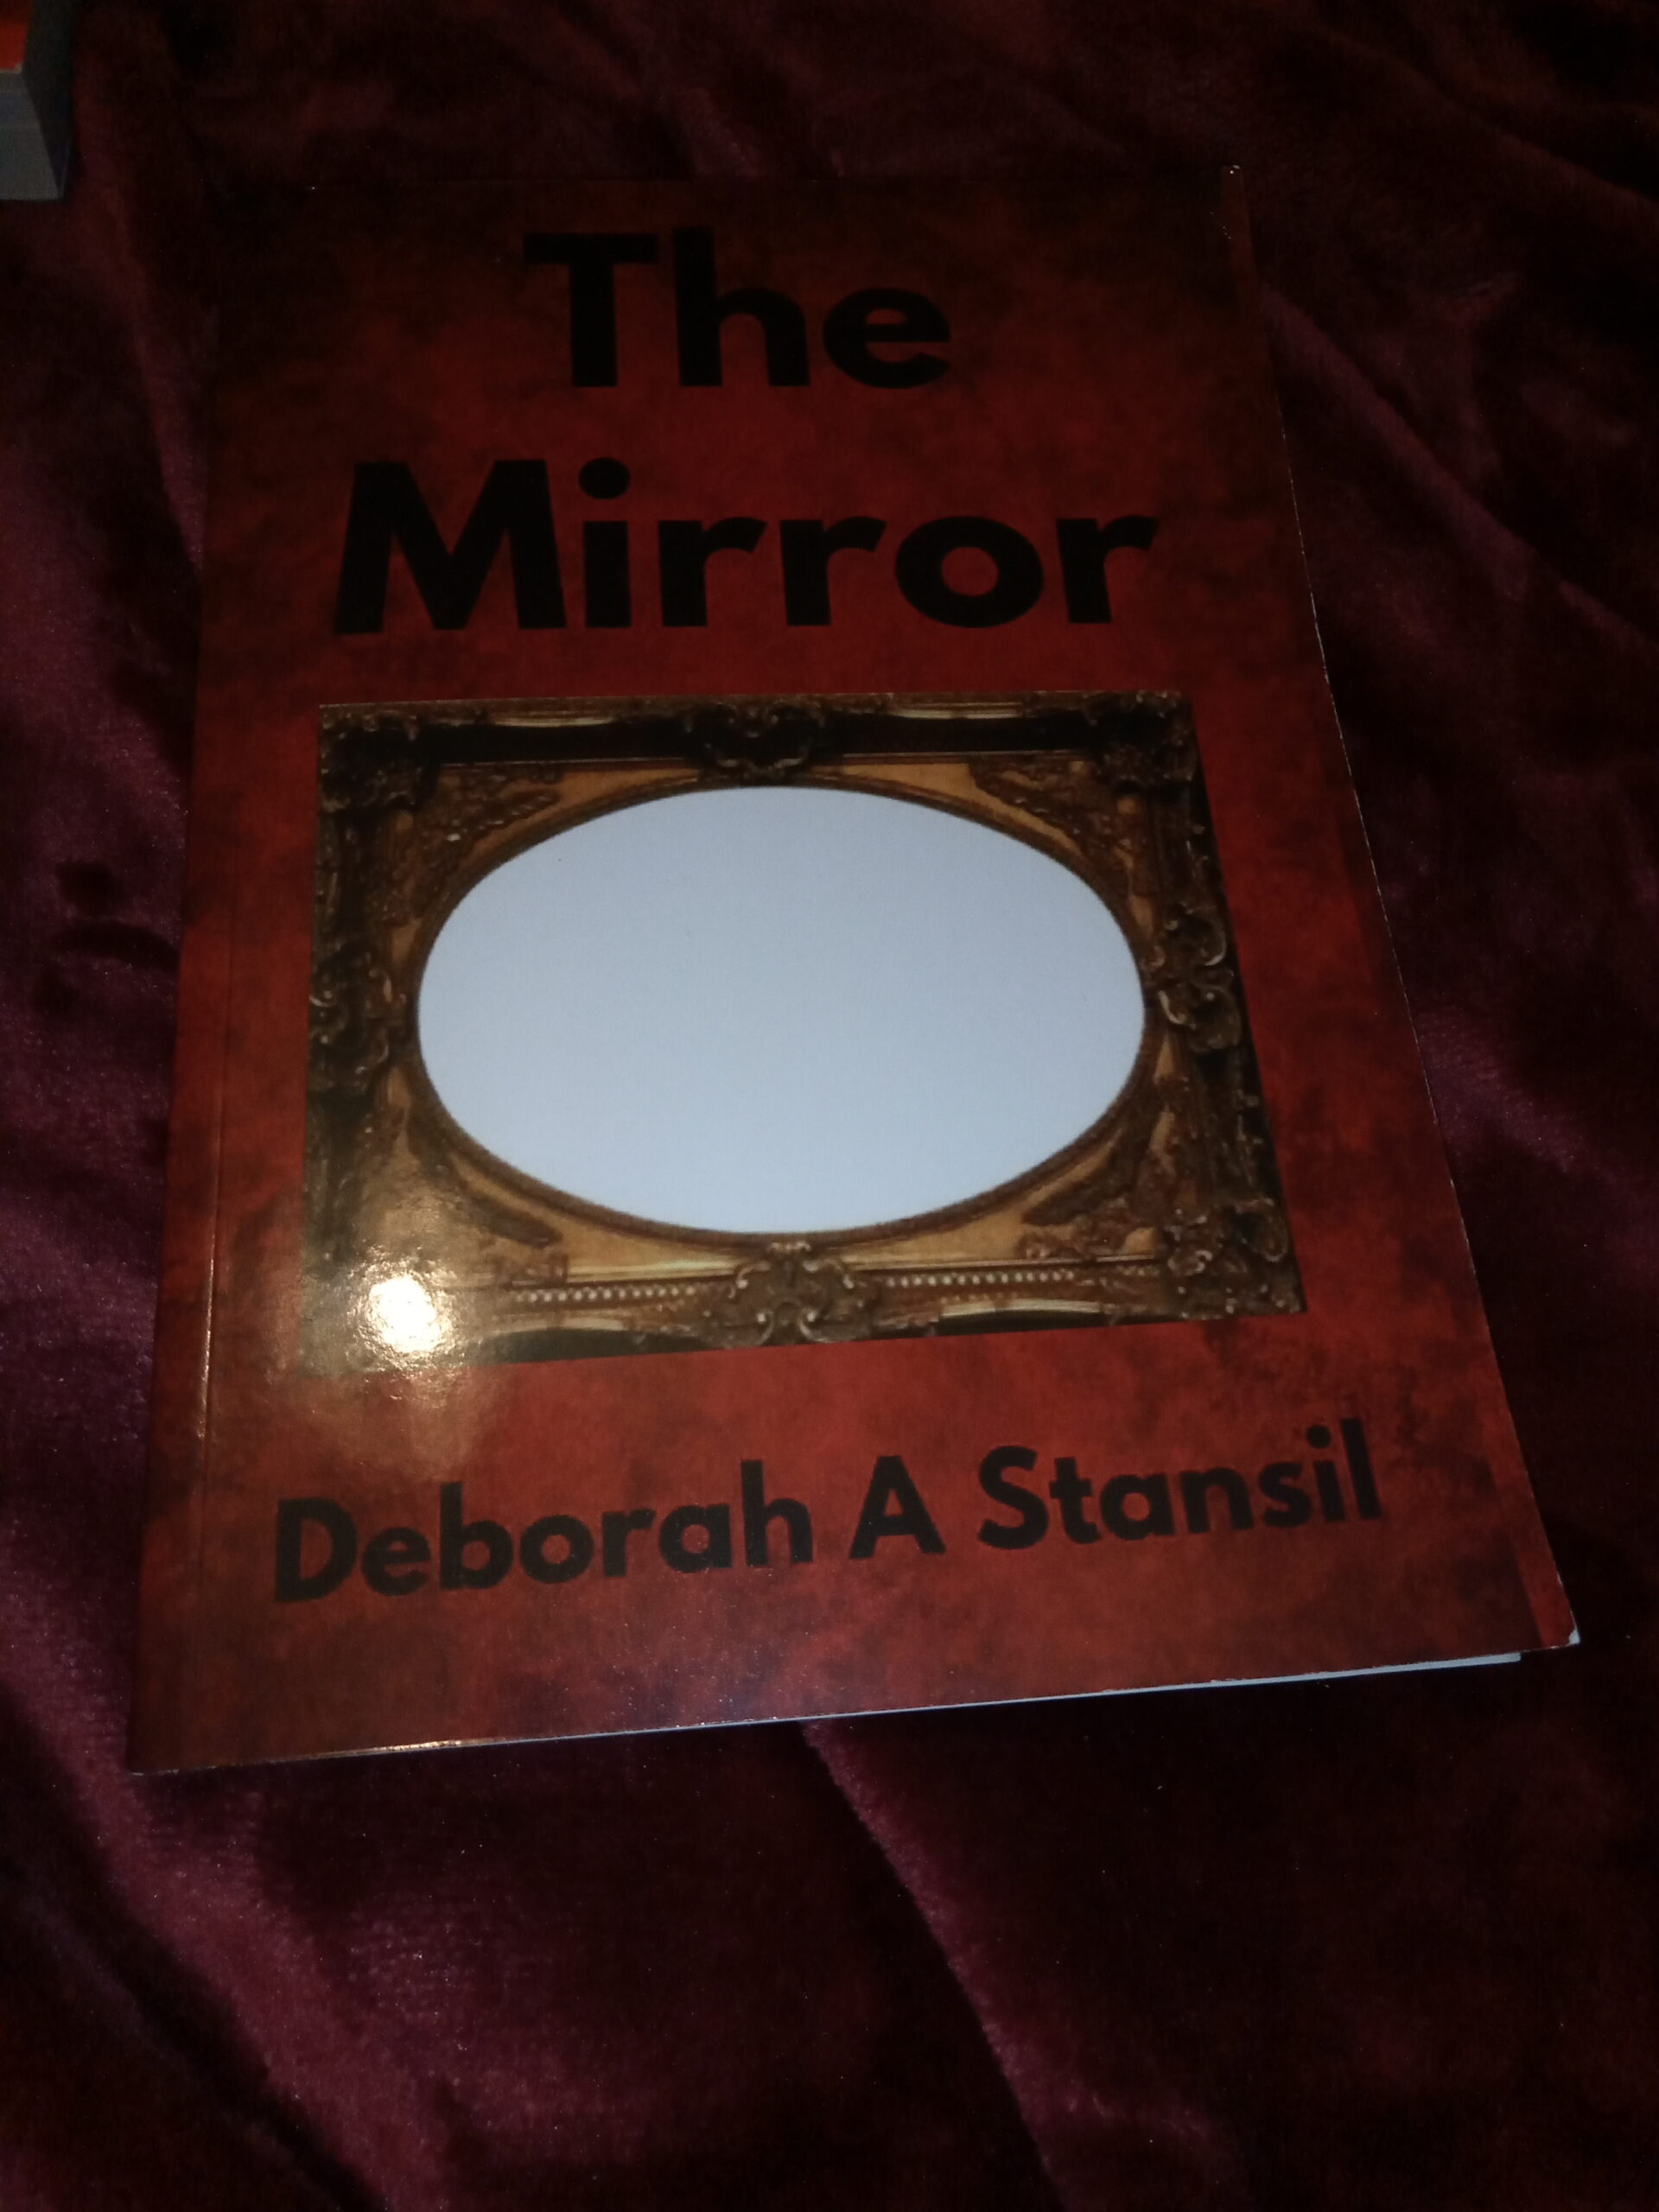 The Mirror